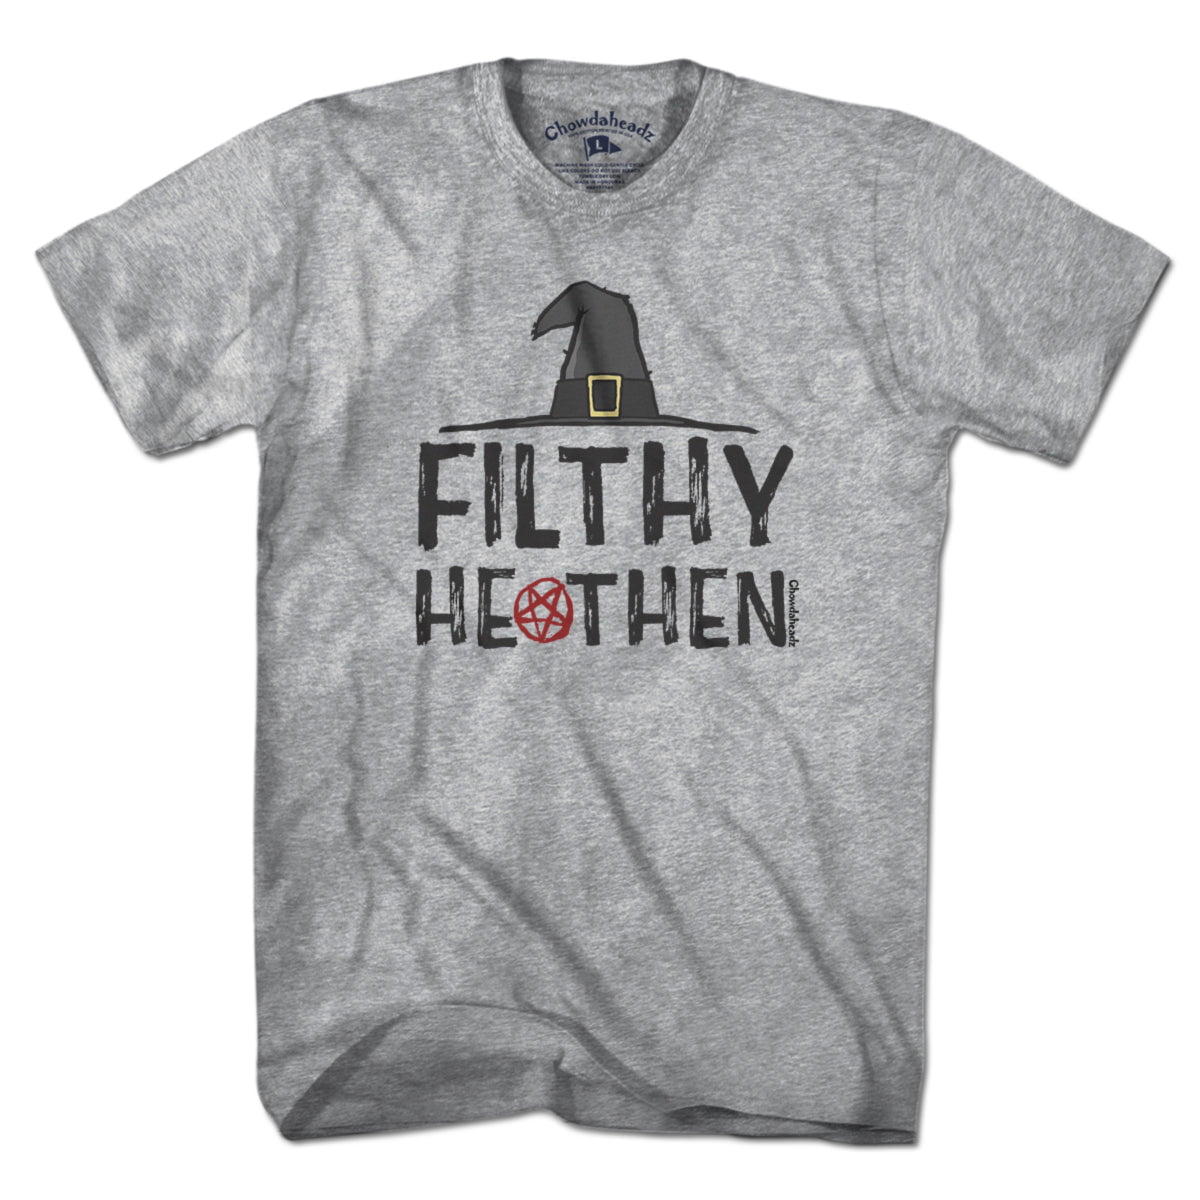 Filthy Heathen Gray T-Shirt - Chowdaheadz